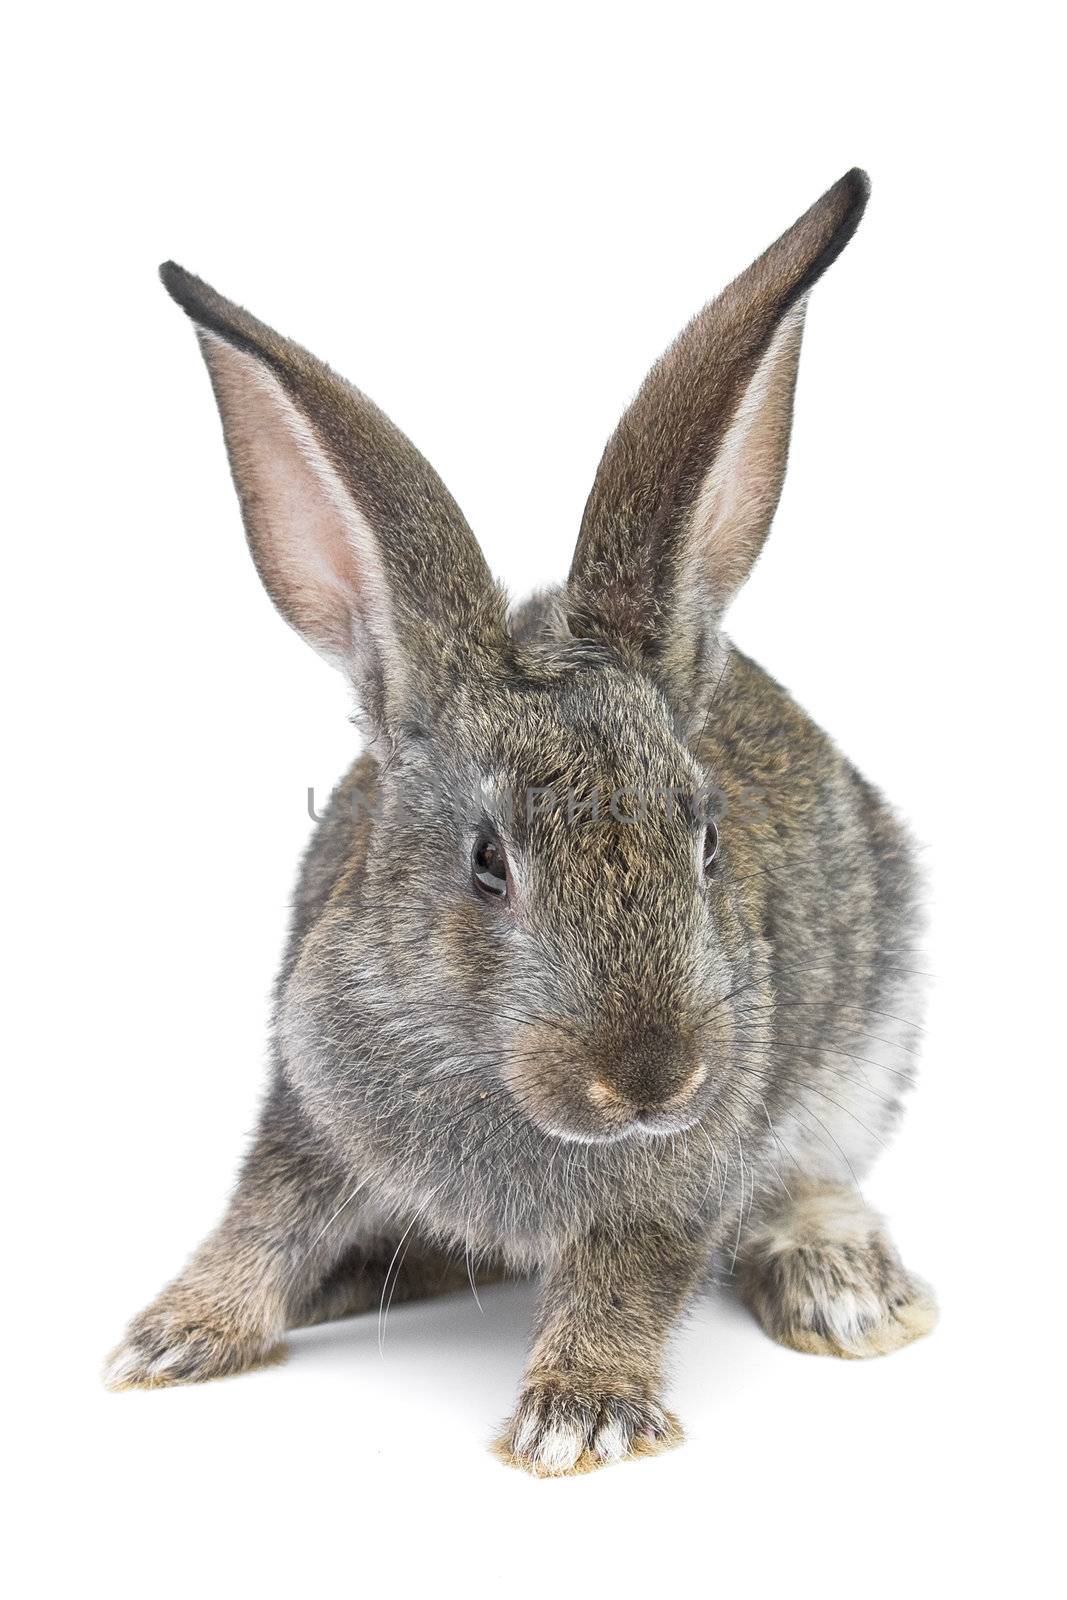 gray rabbit isolated on white background